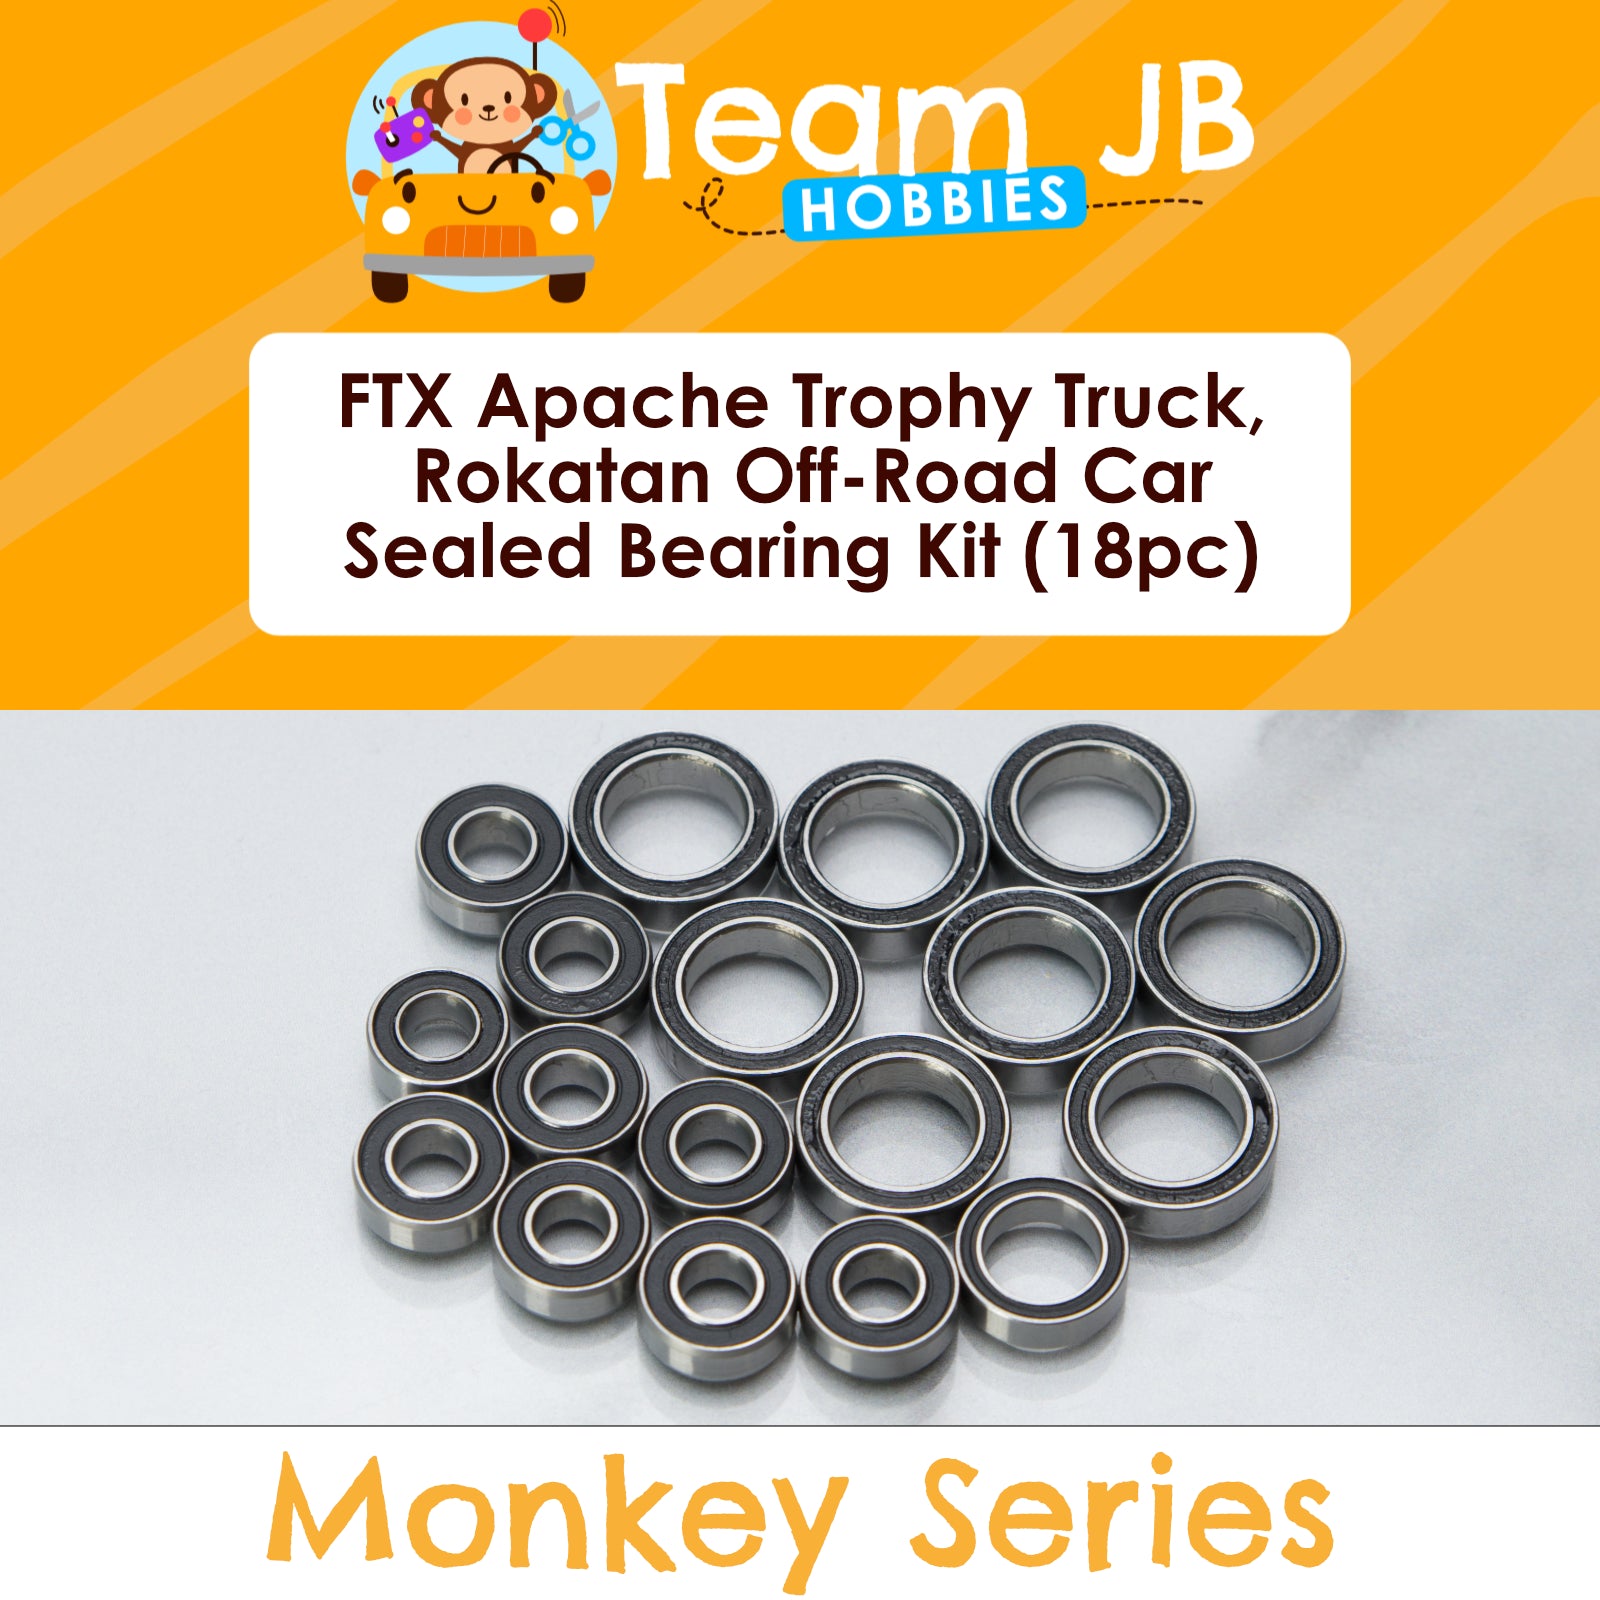 FTX Apache Trophy Truck, Rokatan Off-Road Car - Sealed Bearing Kit